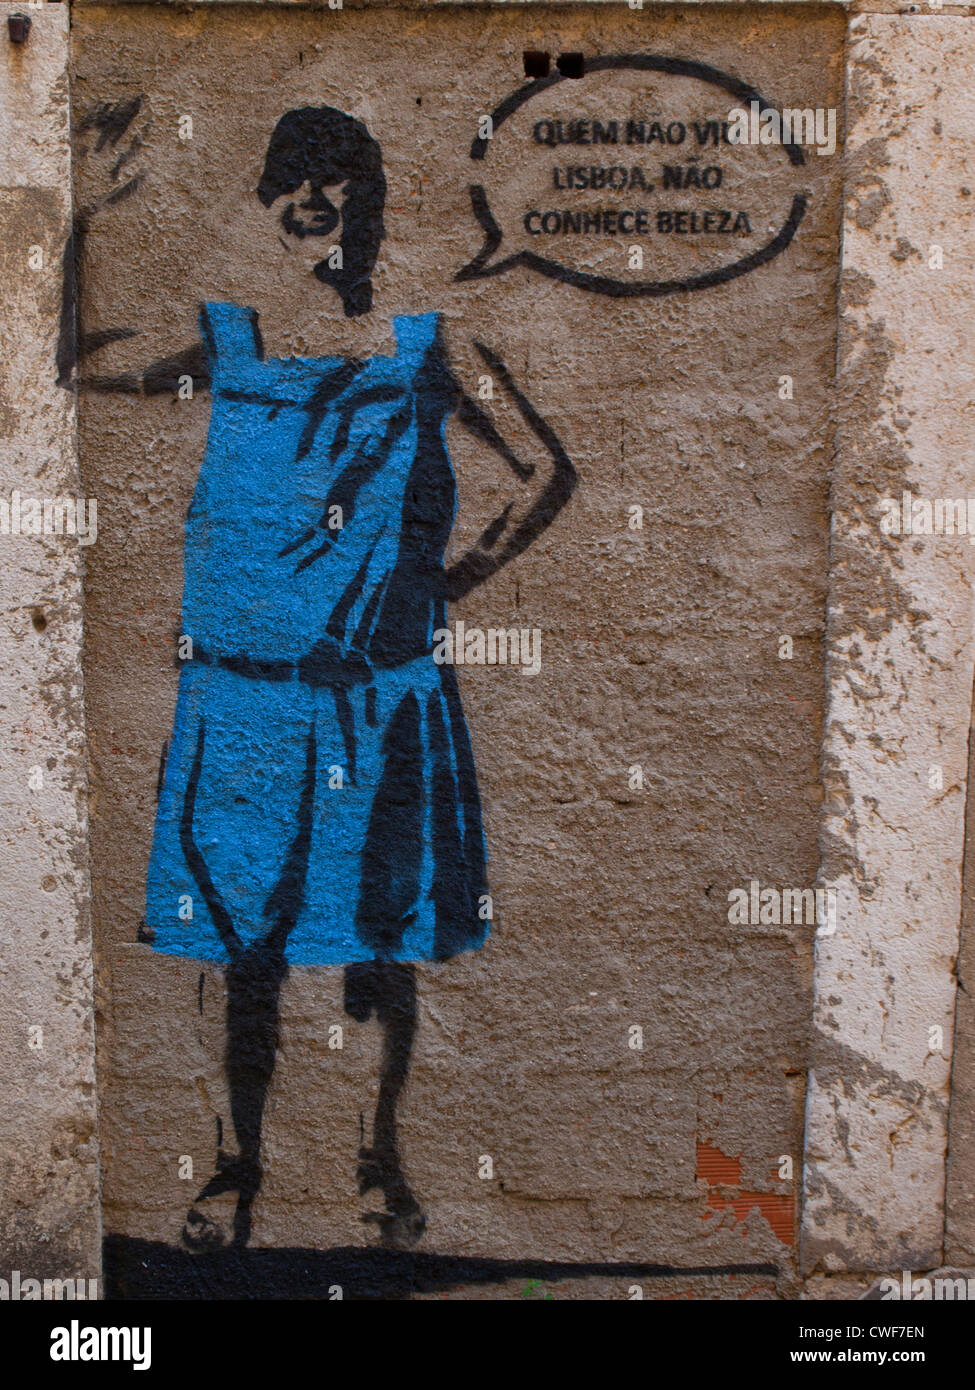 Graffiti in Lisbon street Stock Photo